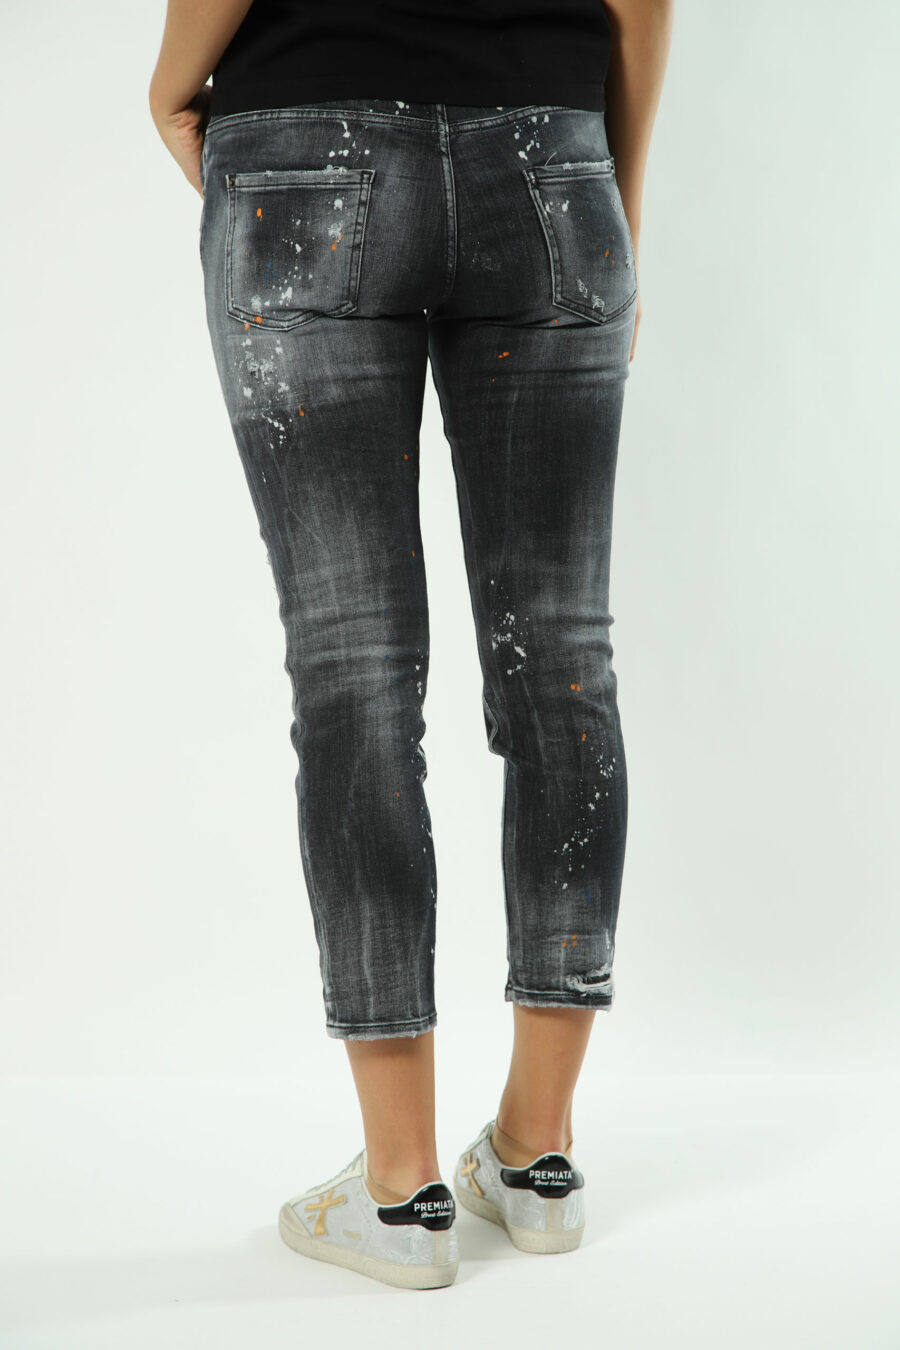 Jeans preto "cool girl" com pintura multicolorida - Fotos 1540